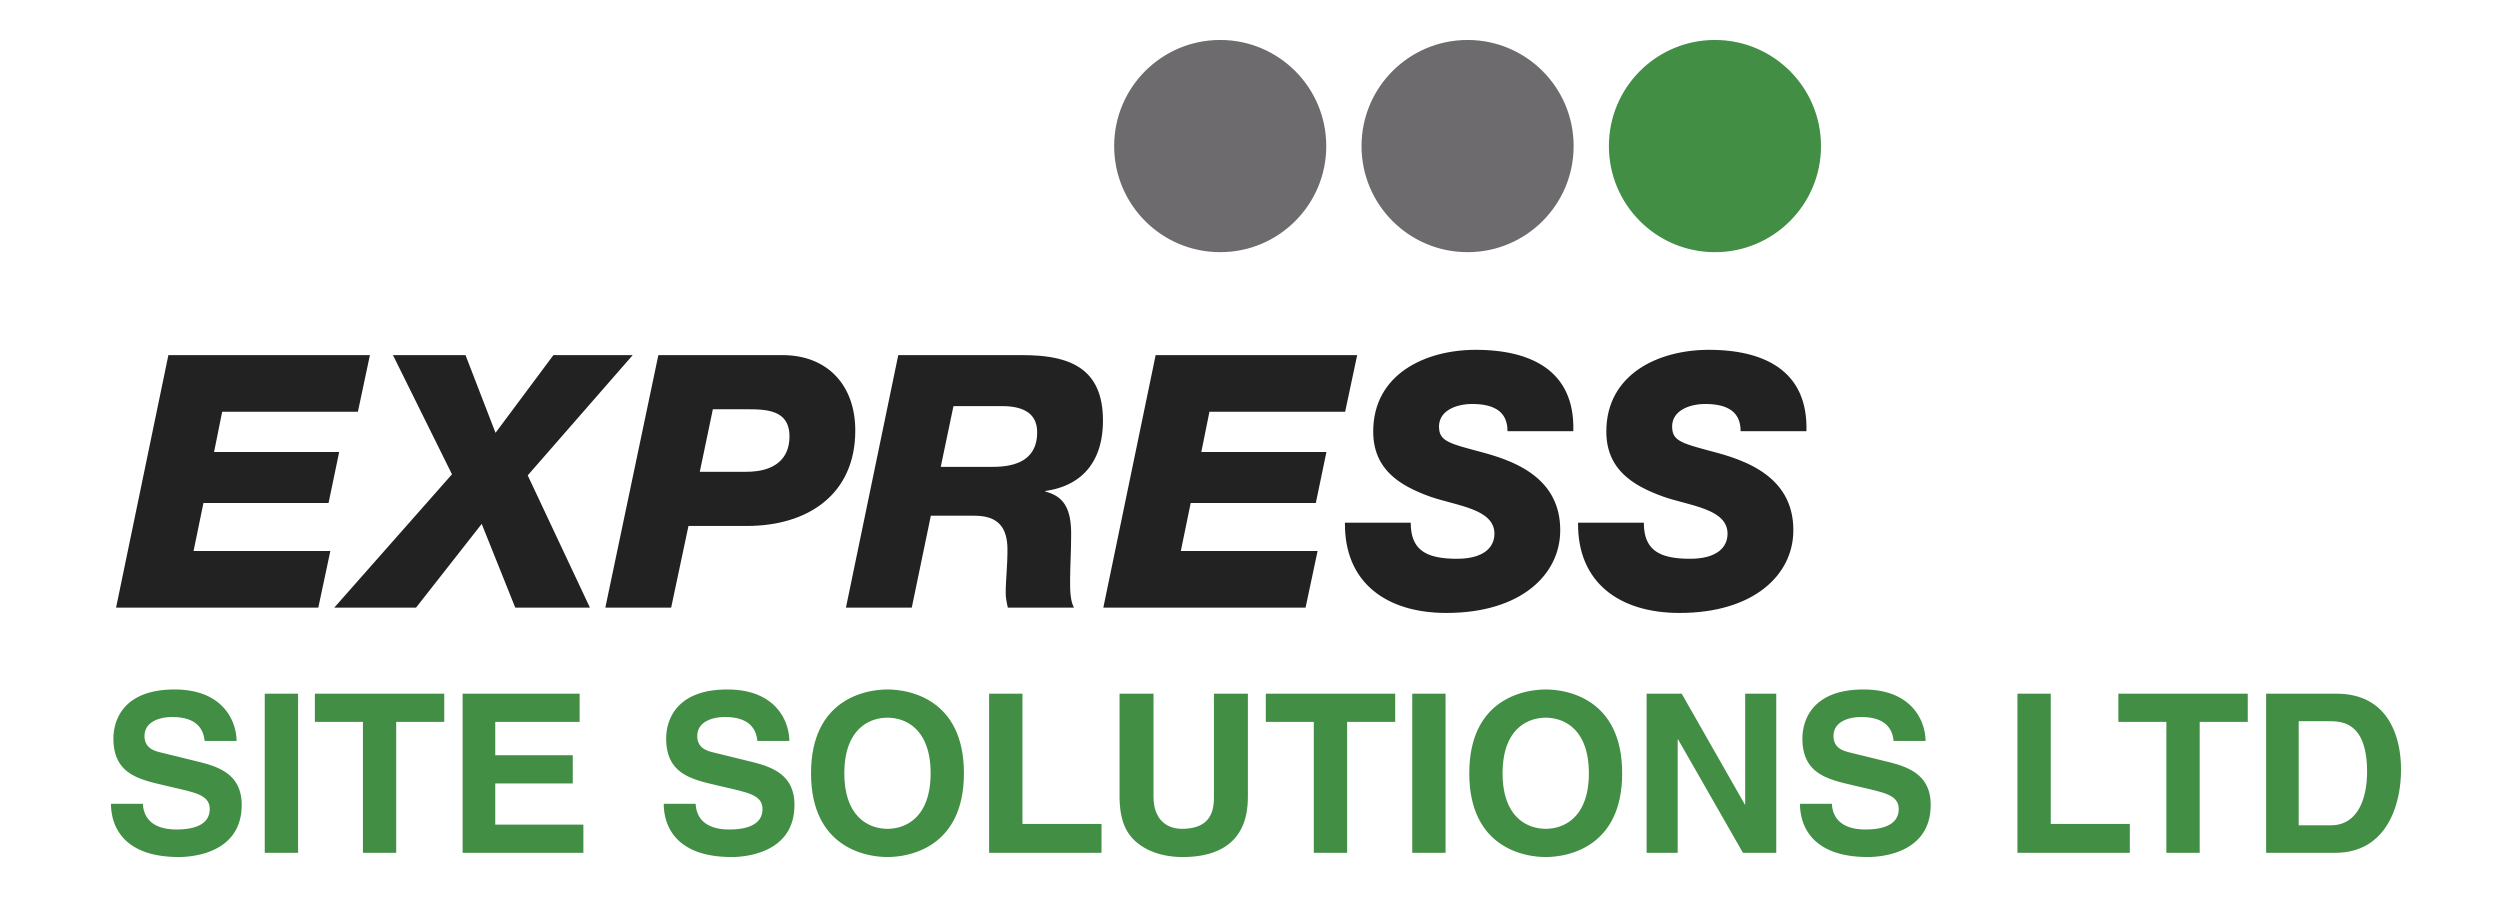 Express Site Solutions LTD - Statutory Scaffold Inspection - Rev 1.1